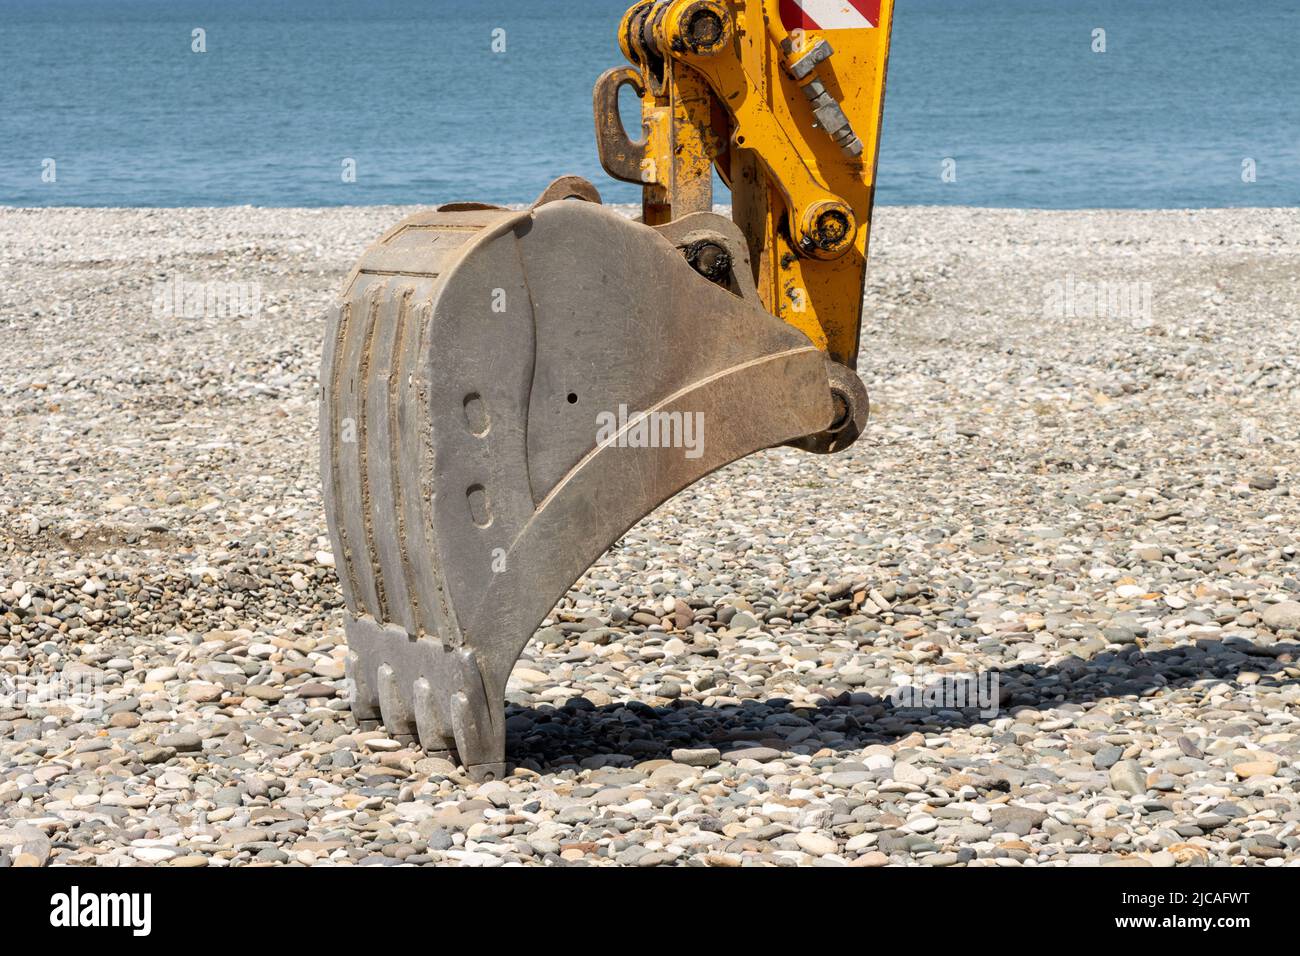 Construction equipment, excavator dozer bucket on the beach by the sea Stock Photo